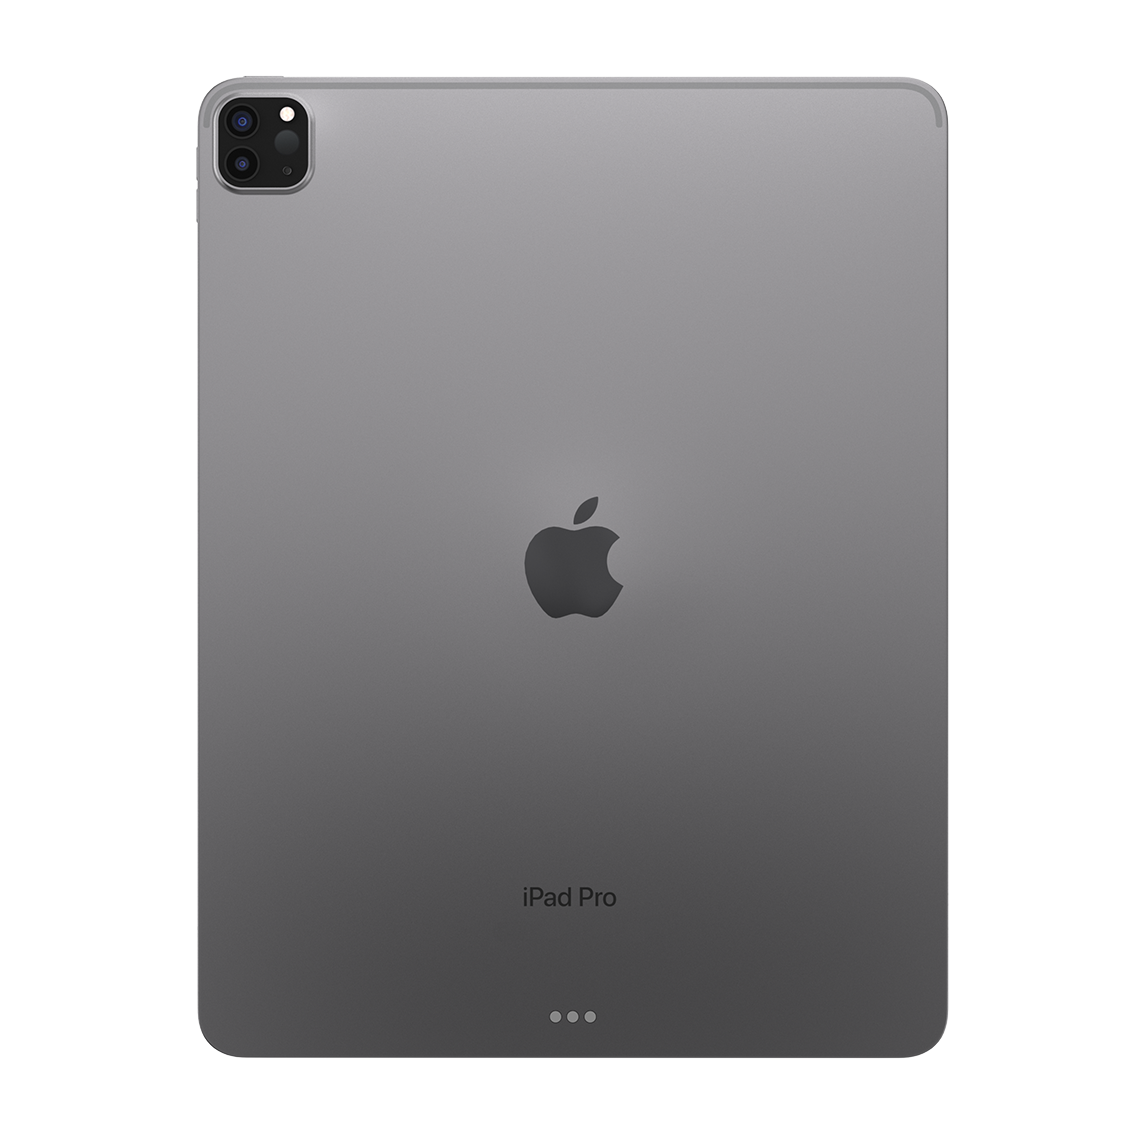 Apple iPad Pro 11-inch 3rd Generation - Space Gray - 256GB, Wi-Fi + Cellular, Open Box